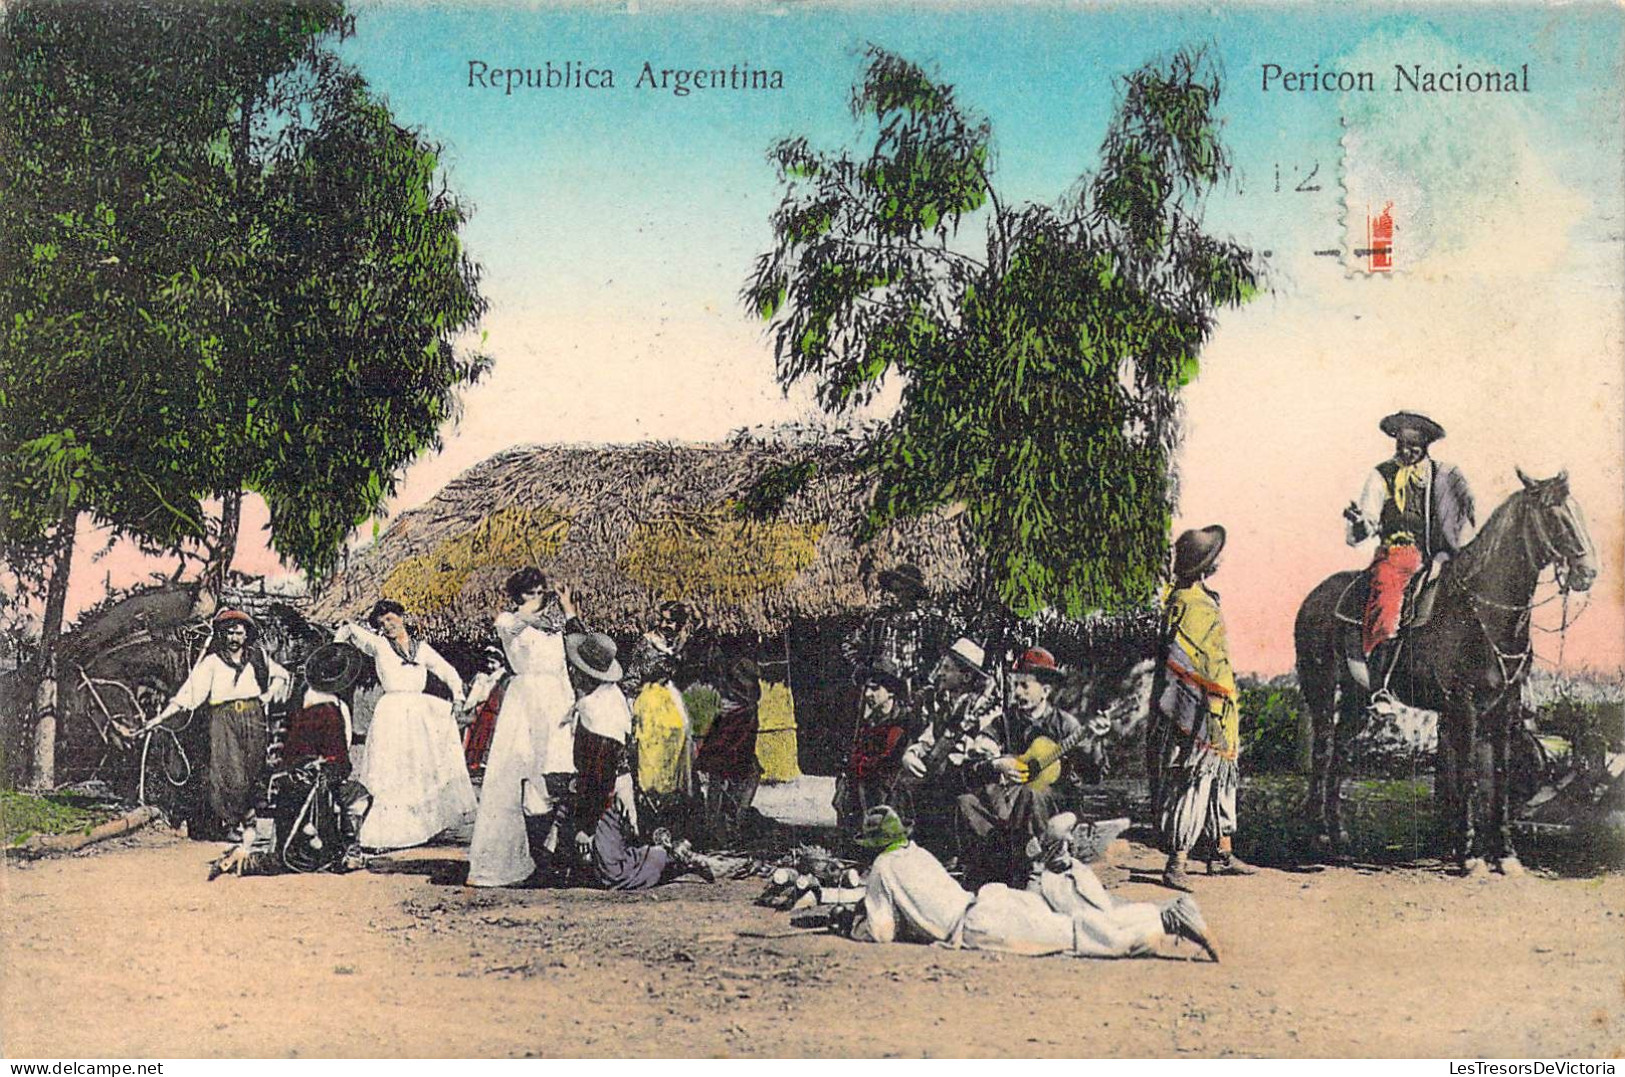 ARGENTINE - Republica Argentina - Pericon Nacional - Carte Postale Ancienne - Argentina